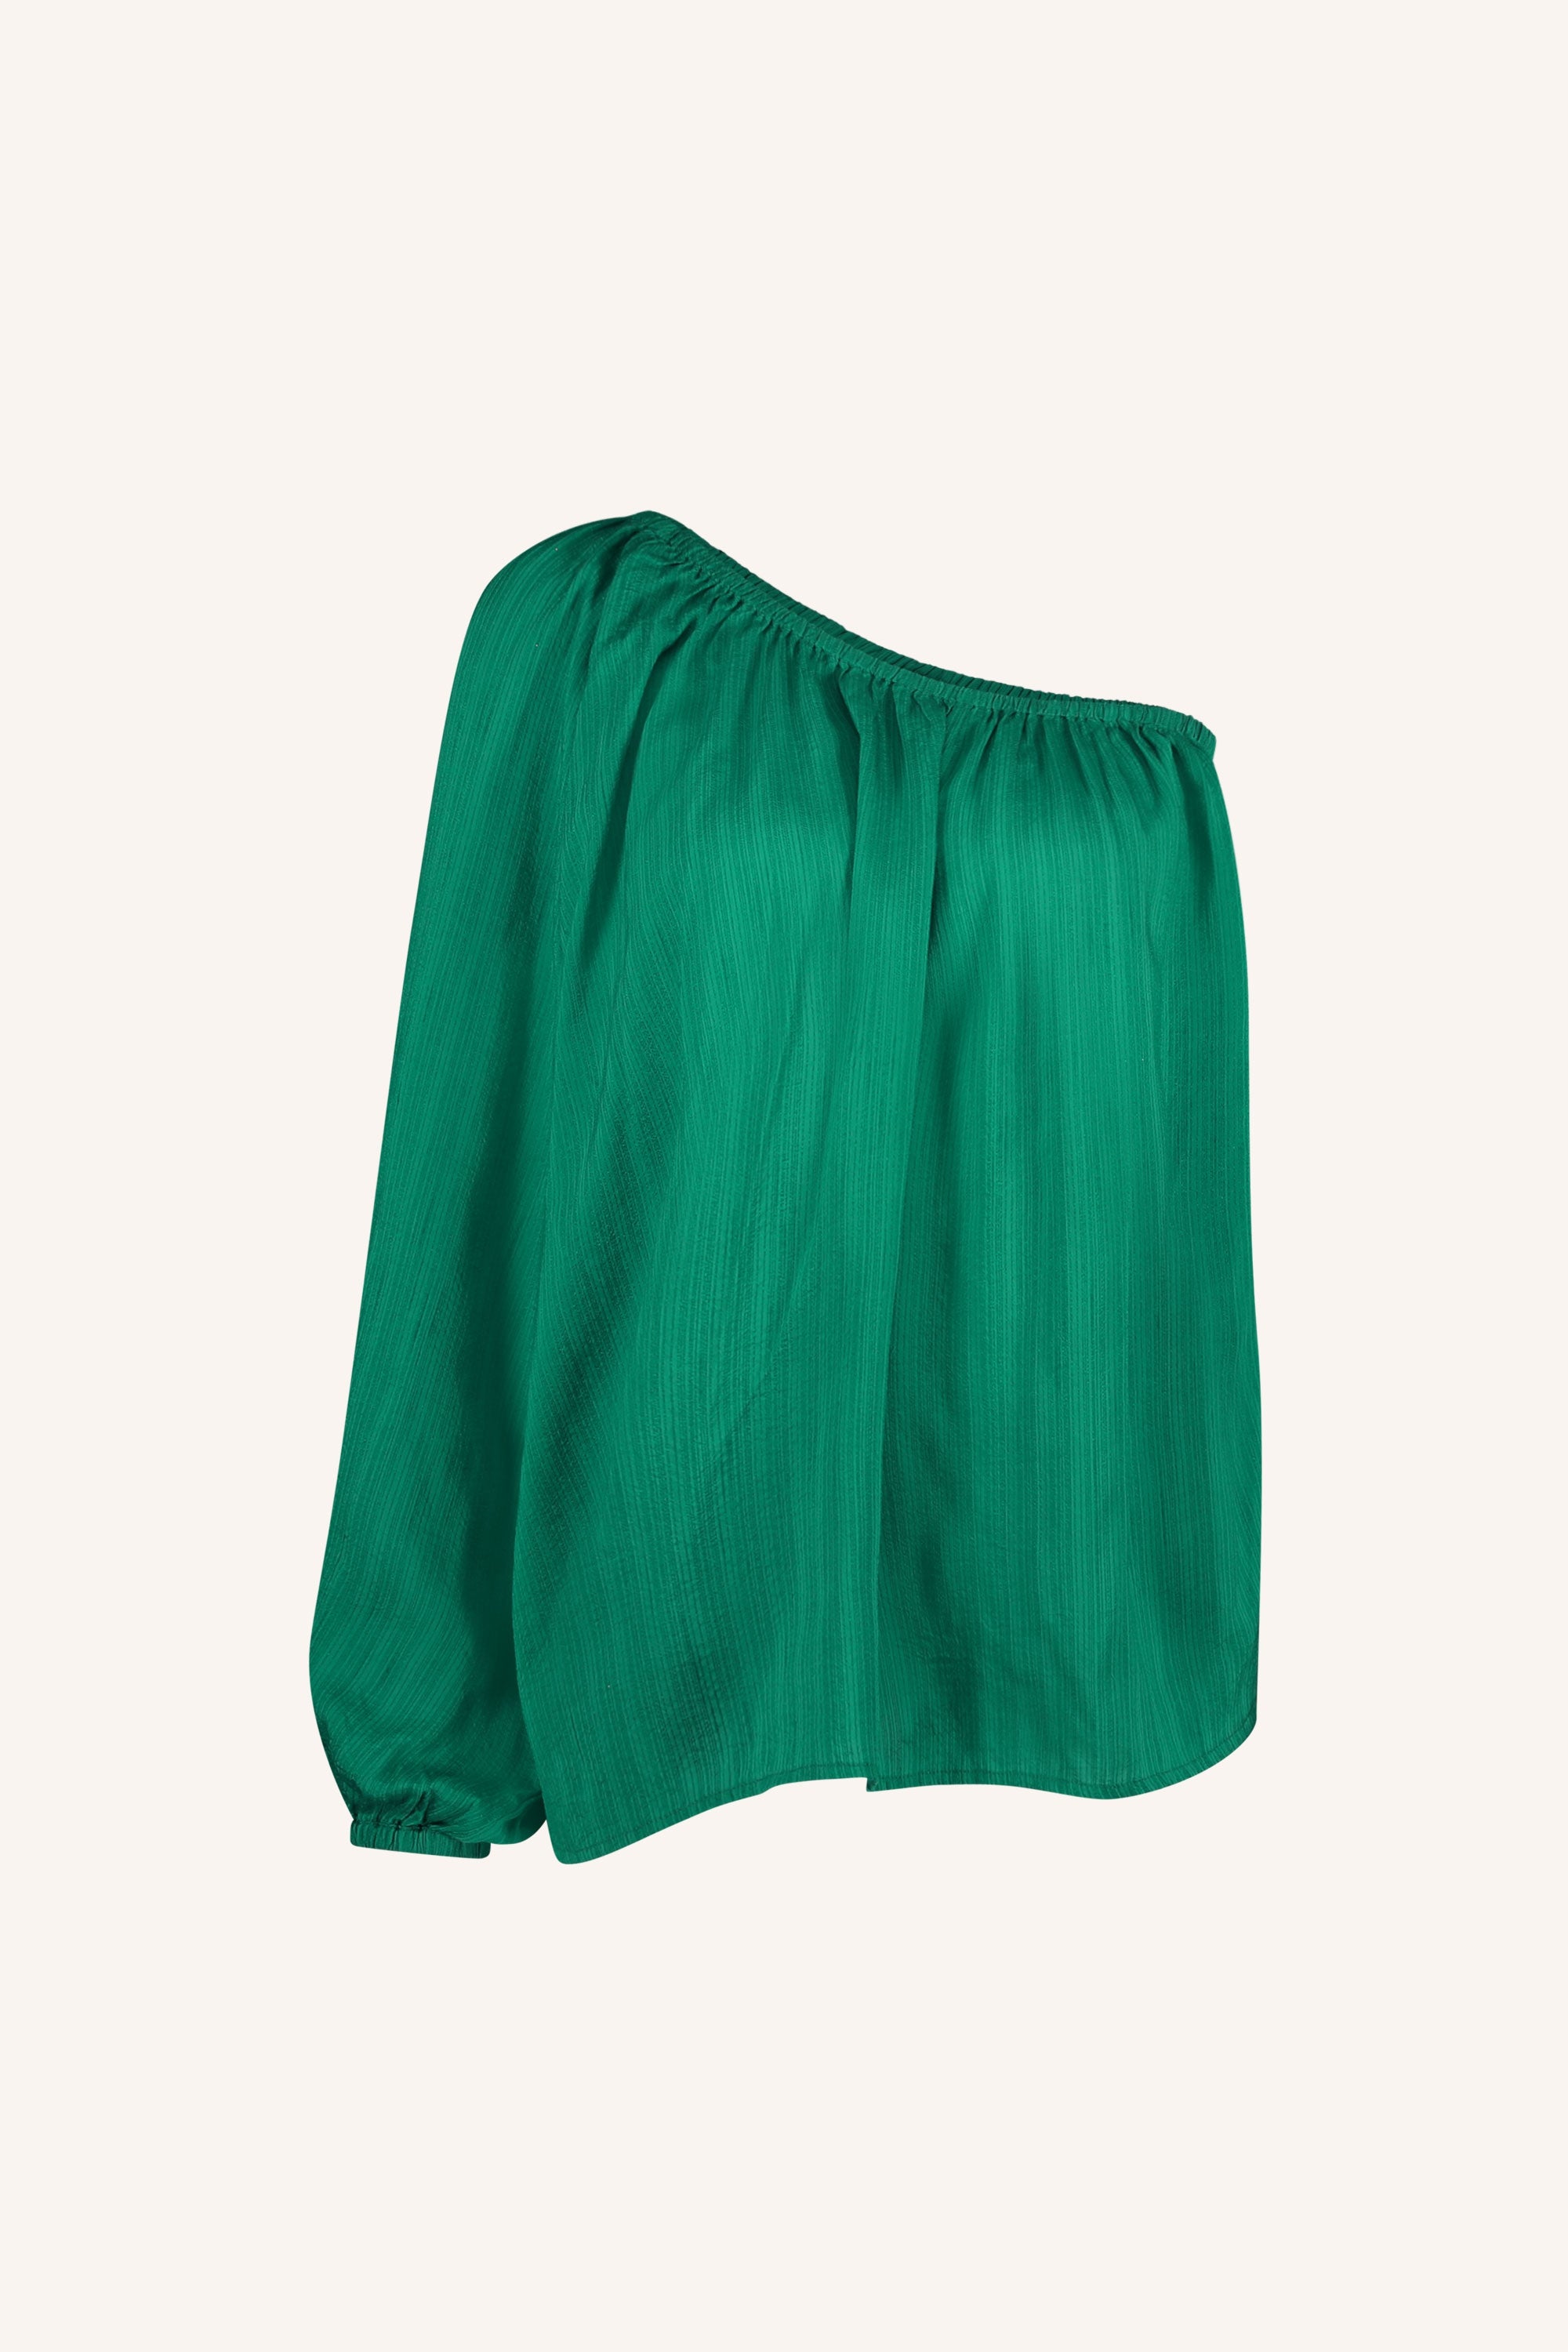 stella blouse | bright green